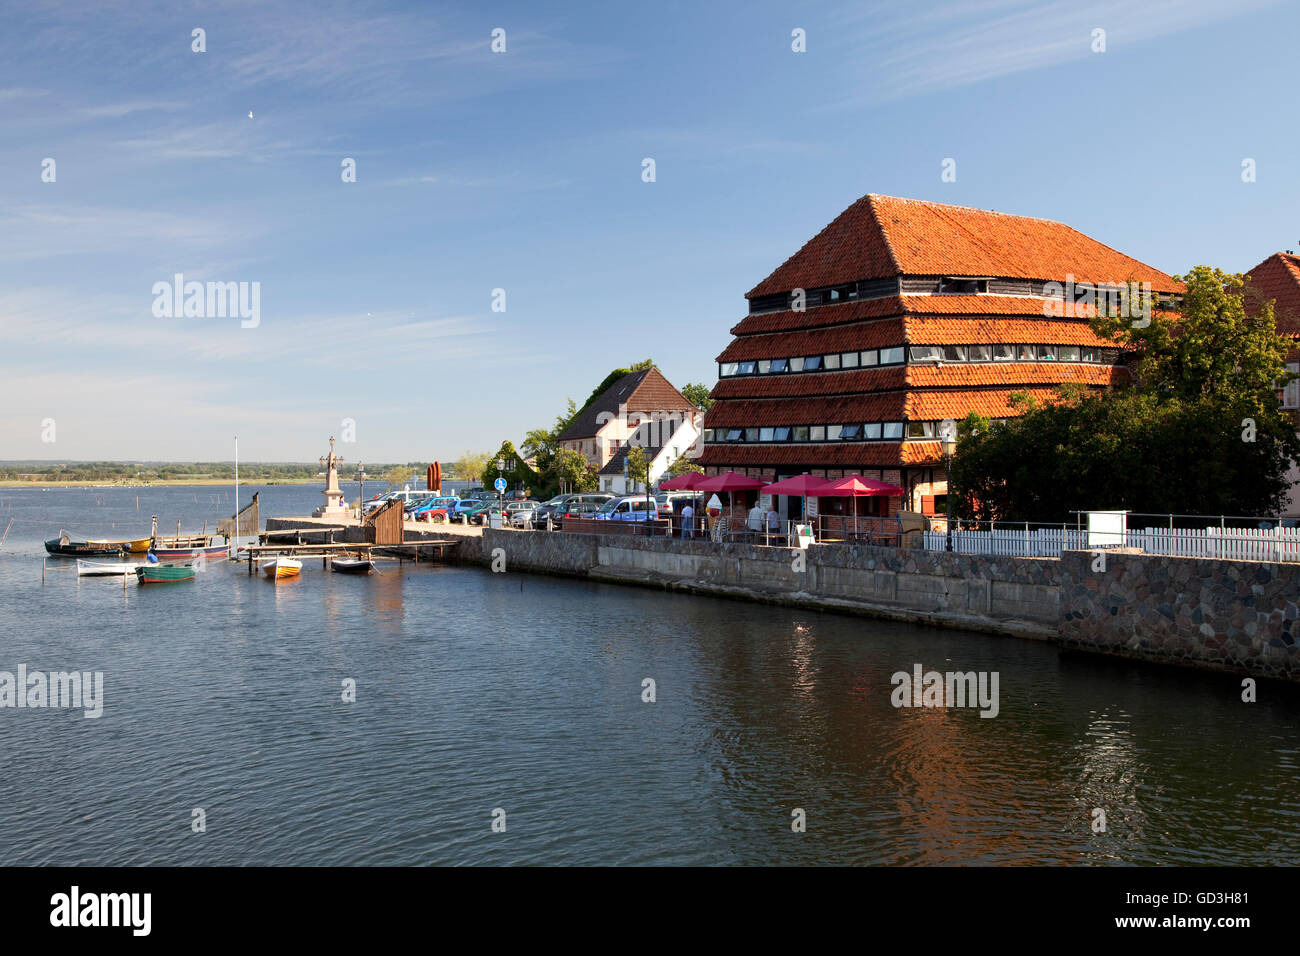 Magazzino Pagodenspeicher, porto di Neustadt, Luebeck Bay, Mar Baltico, Schleswig-Holstein Foto Stock